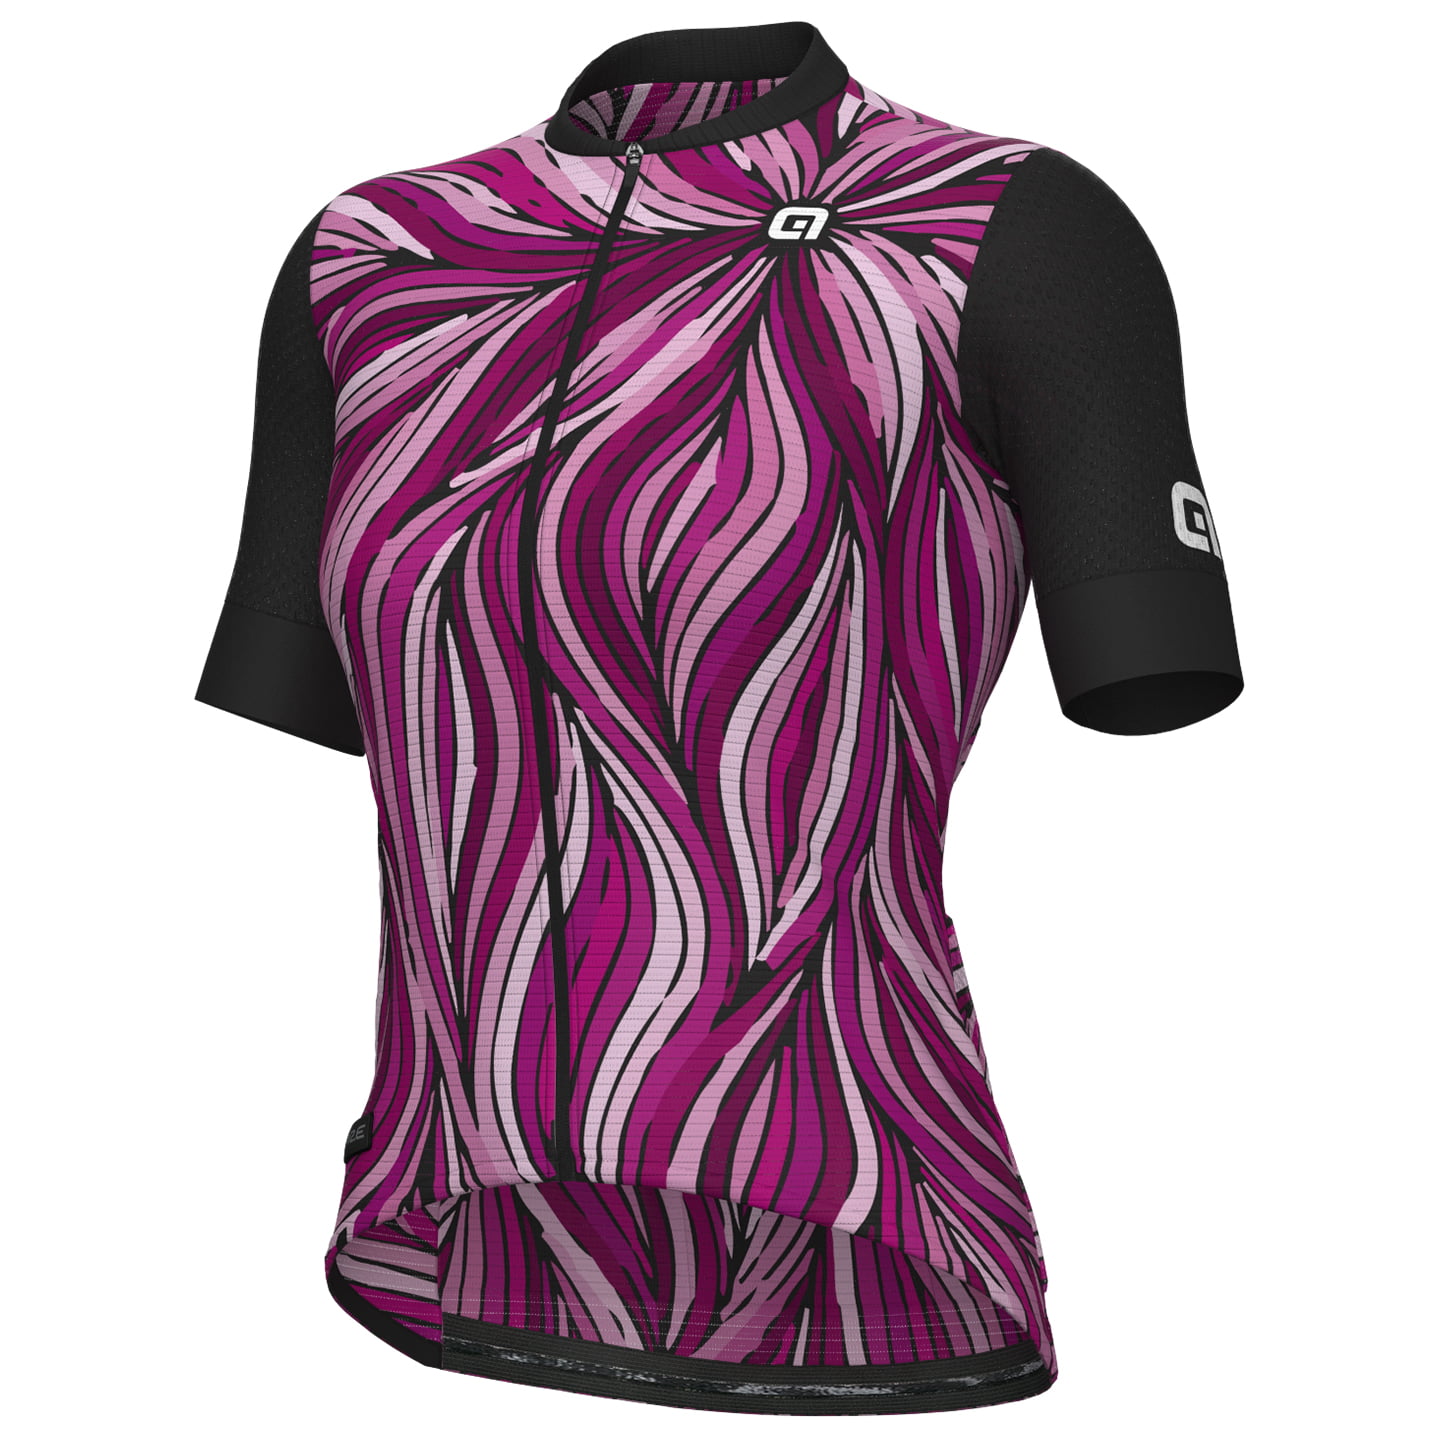 ALE Art Women’s Short Sleeve Jersey, size S, Cycling jersey, Cycle gear